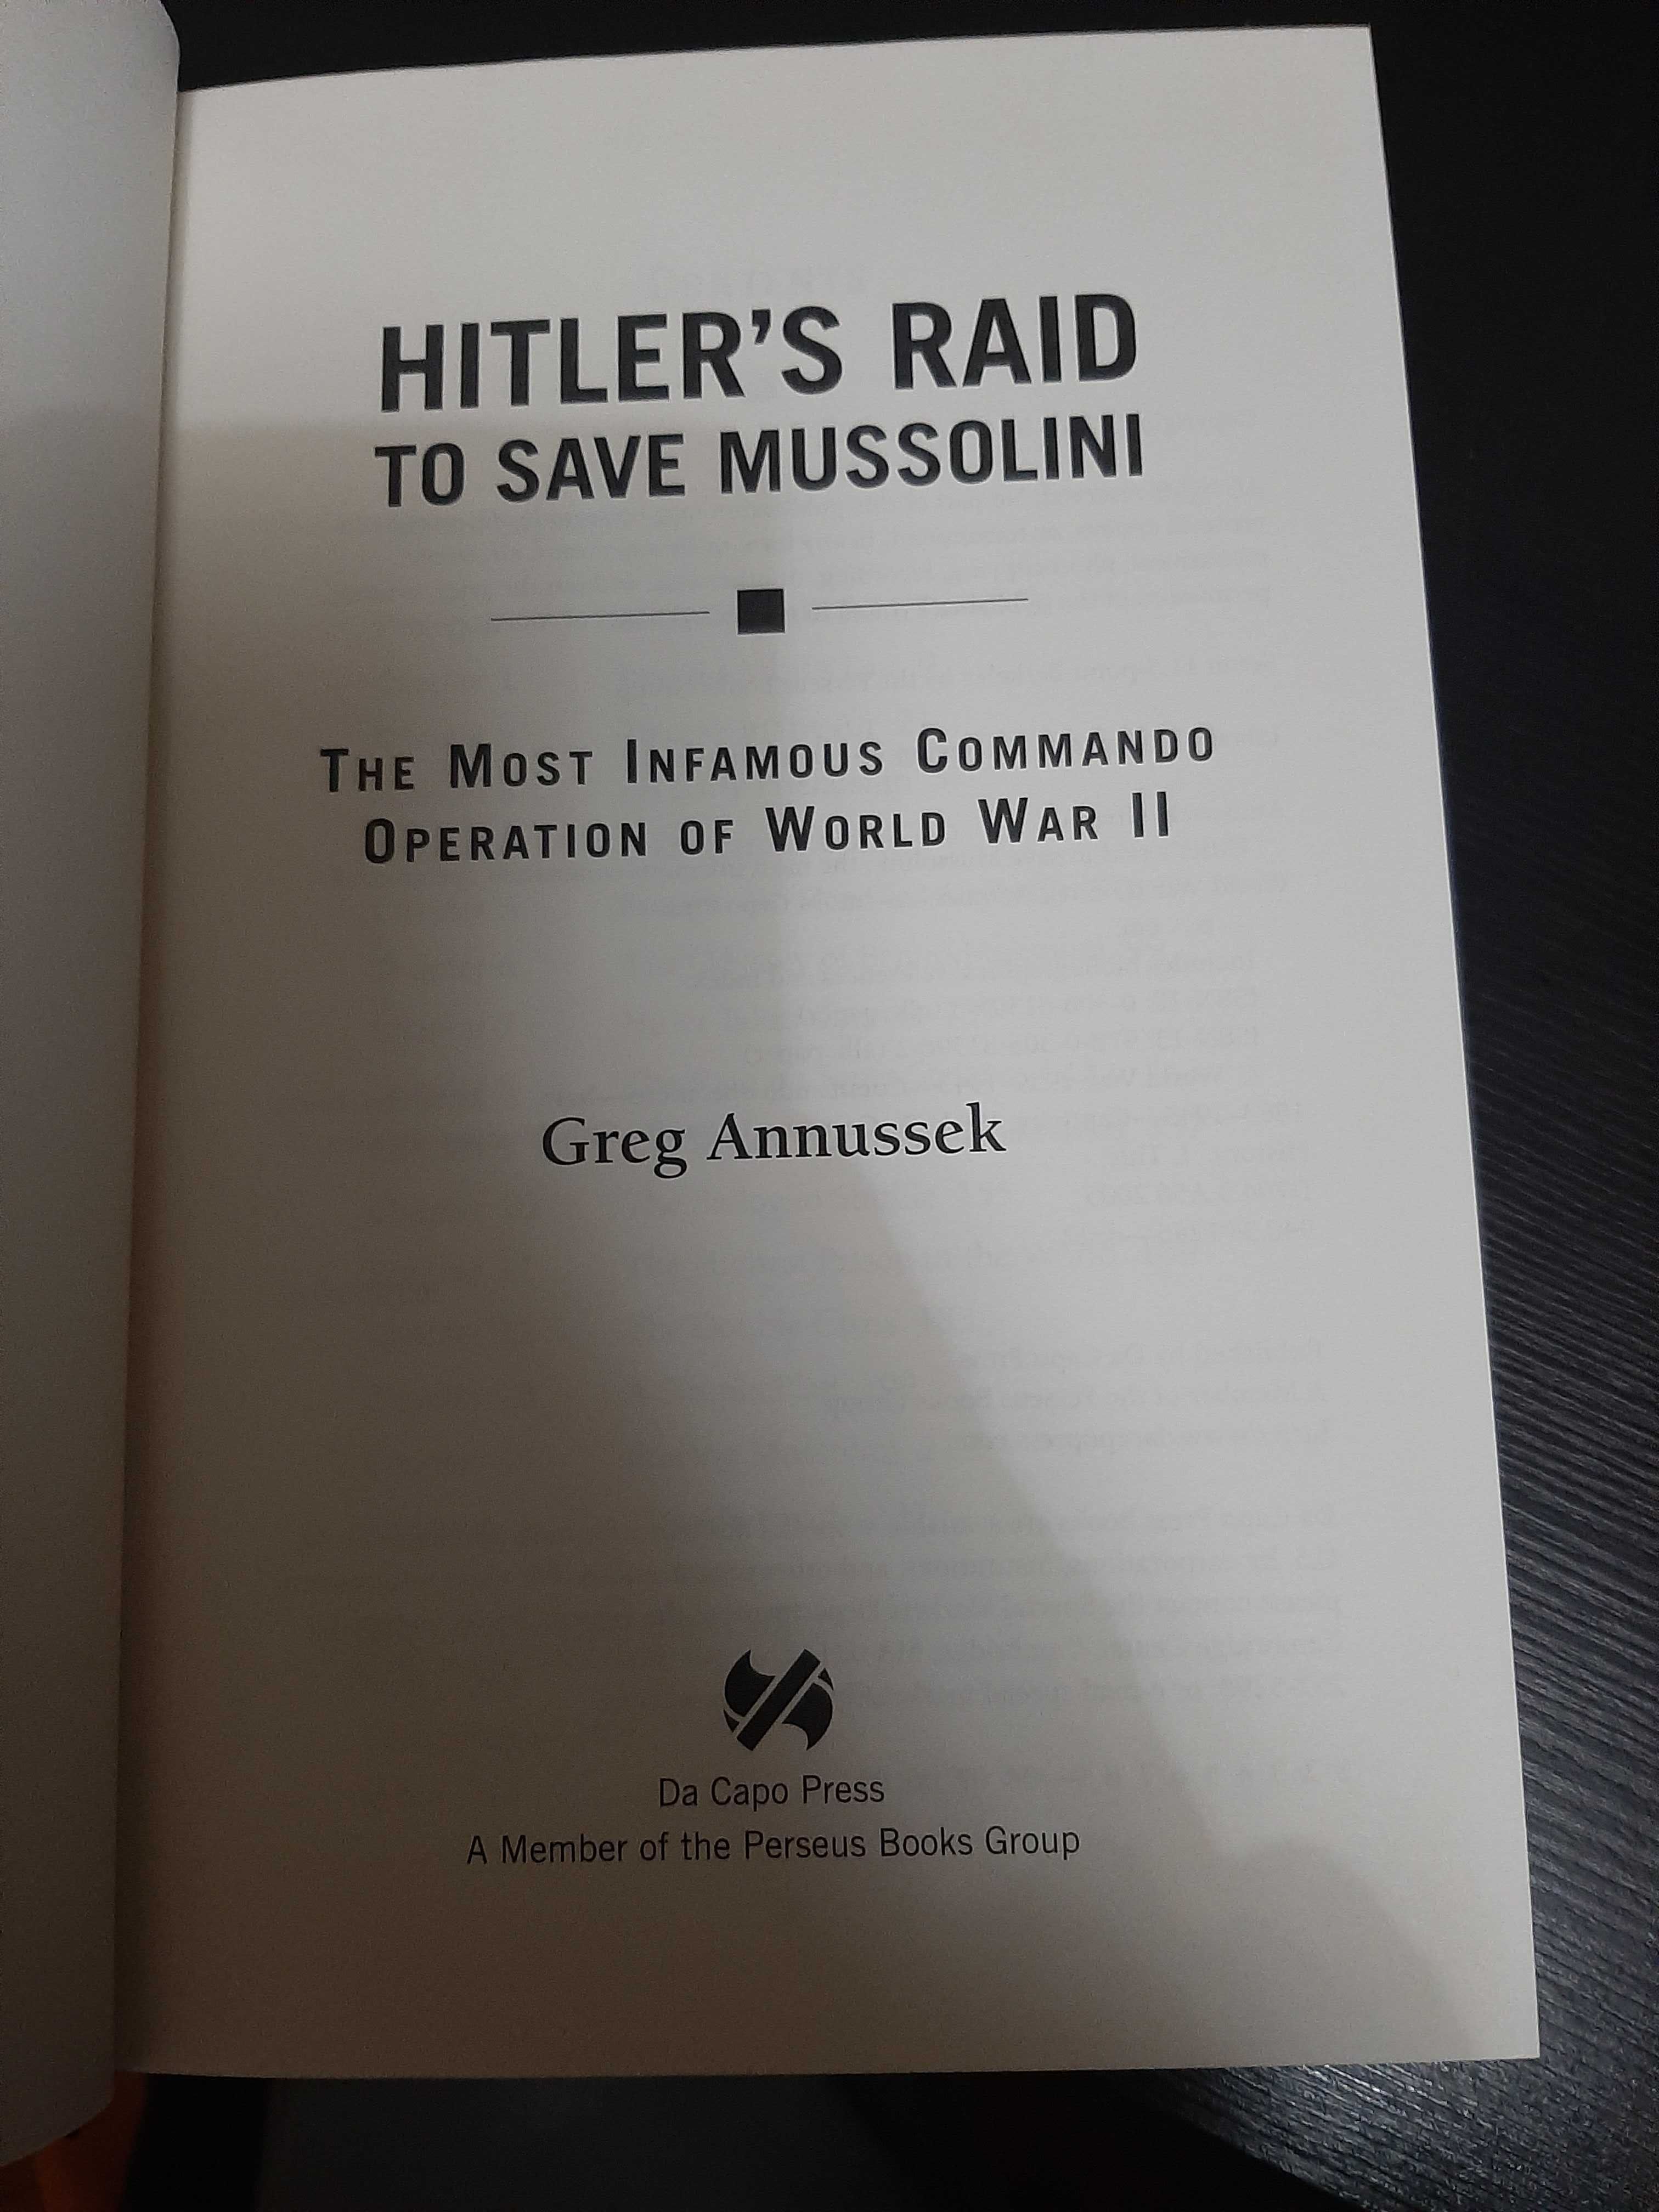 Greg Annussek – Hitler's Raid to Save Mussolini: Commando Operation